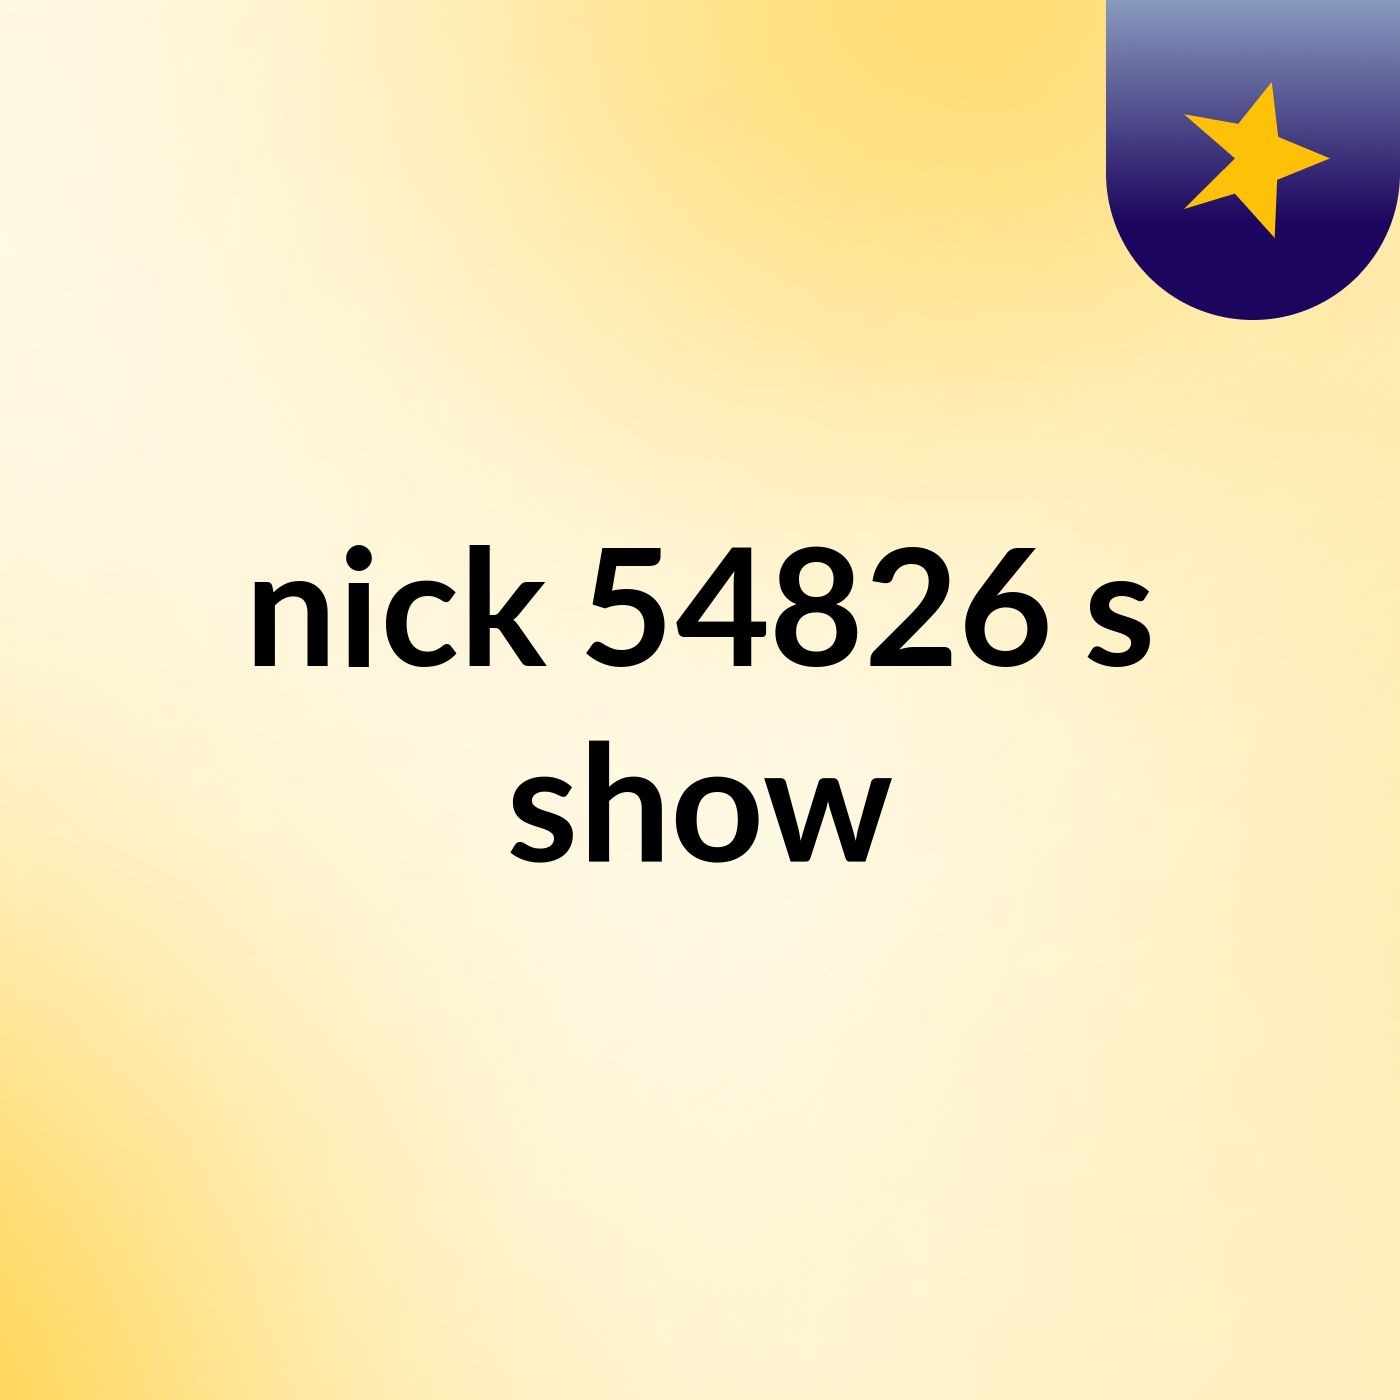 nick 54826's show